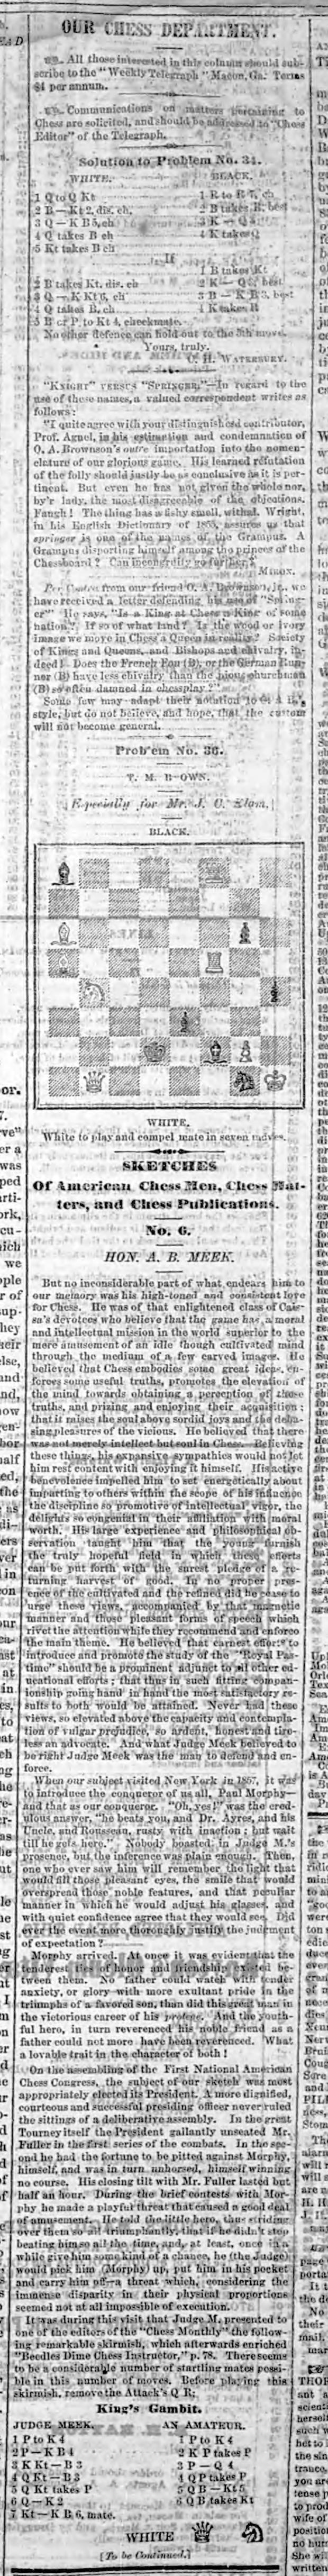 1867.05.10-01 Macon Georgia Weekly Telegraph.jpg